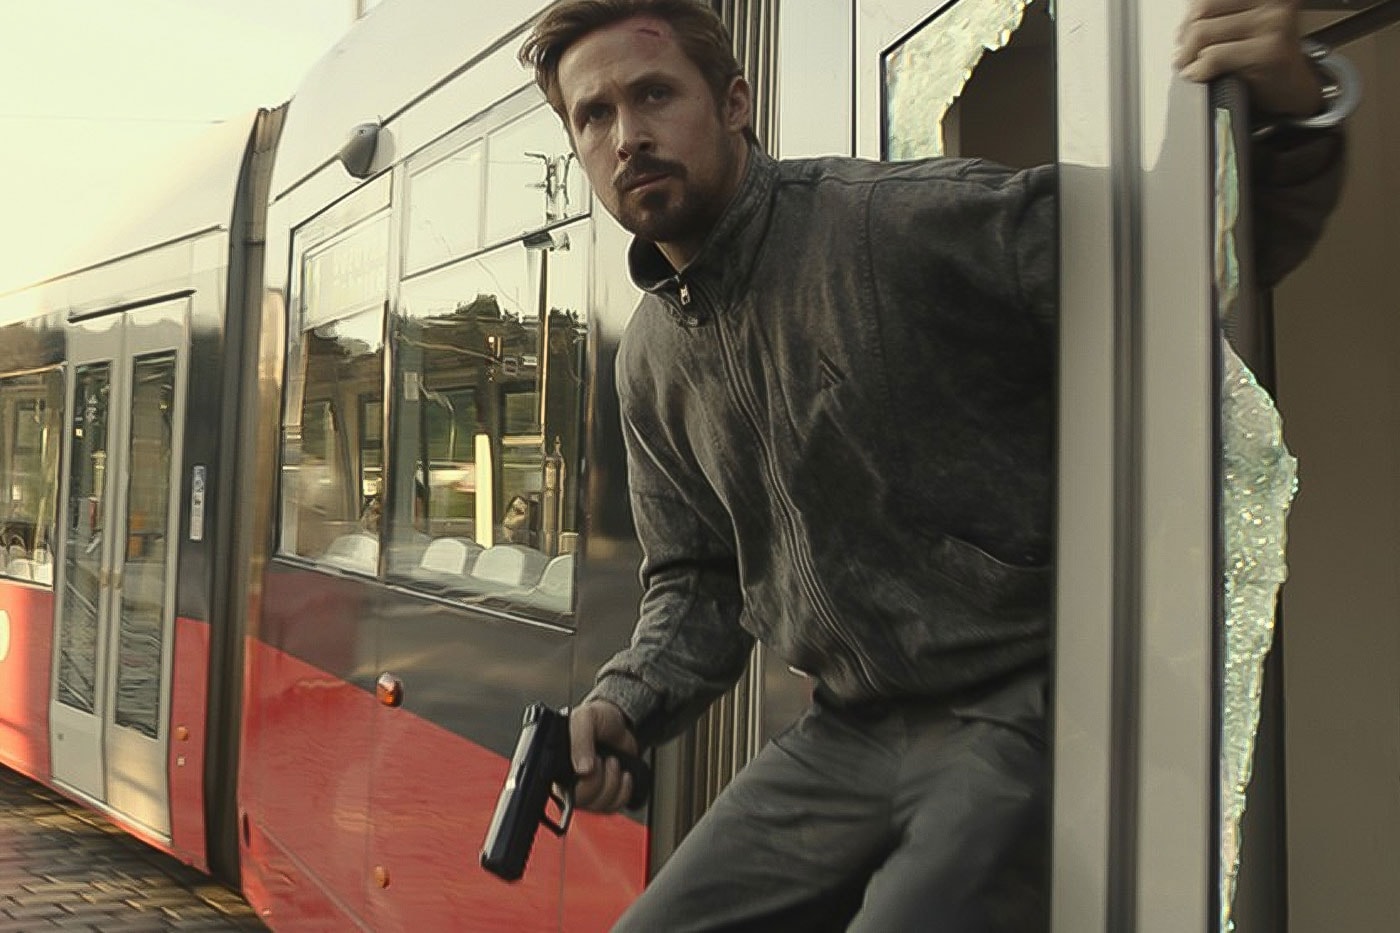 THE GRAY MAN 2 Teaser (2023) With Ryan Gosling & Ana De Armas 